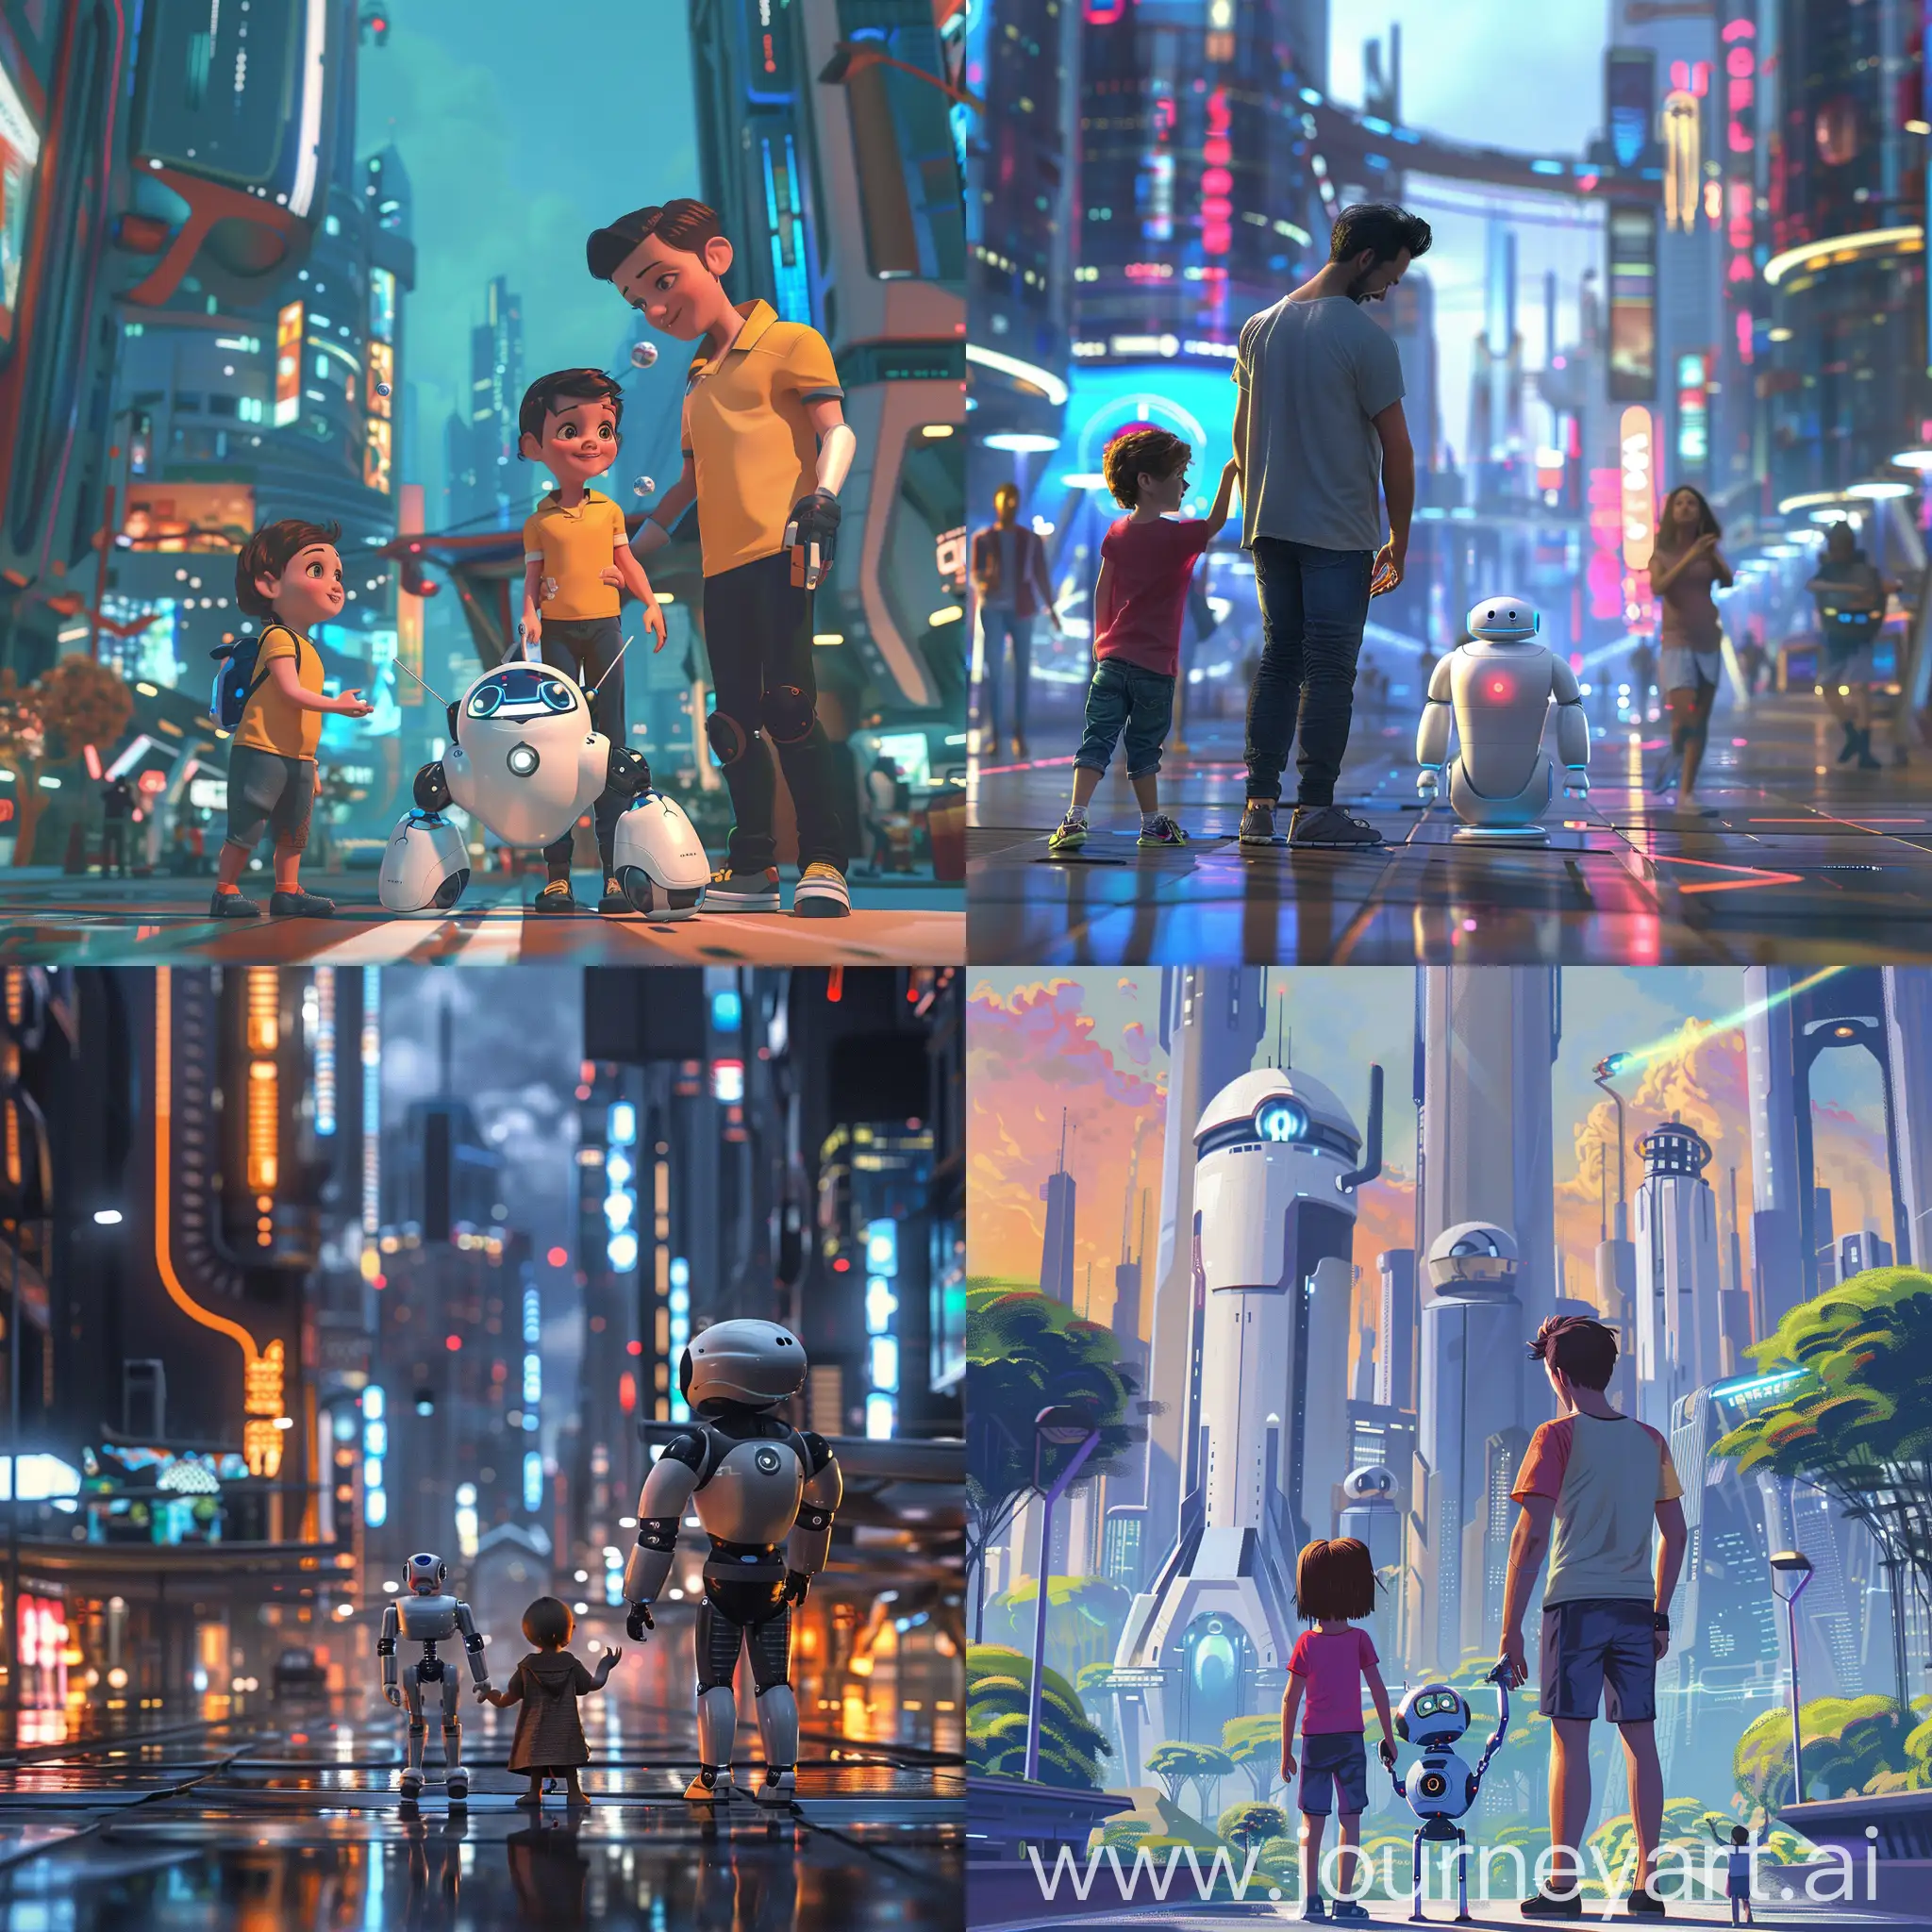 "A young urban family and their robot exploring a futuristic city"